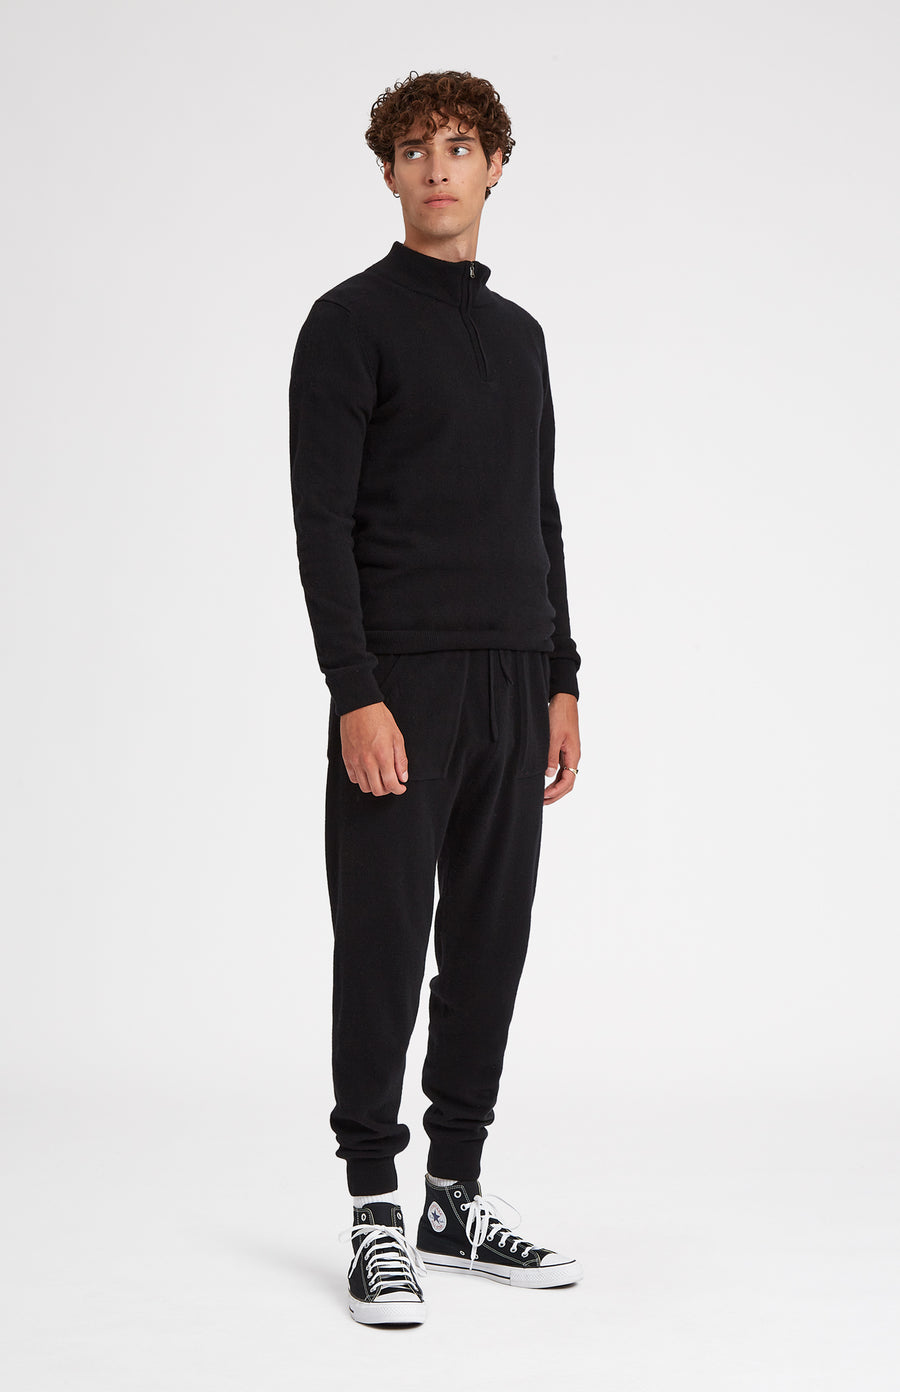 Men's Knitted Merino Cashmere Joggers in Black on model - Pringle of Scotland